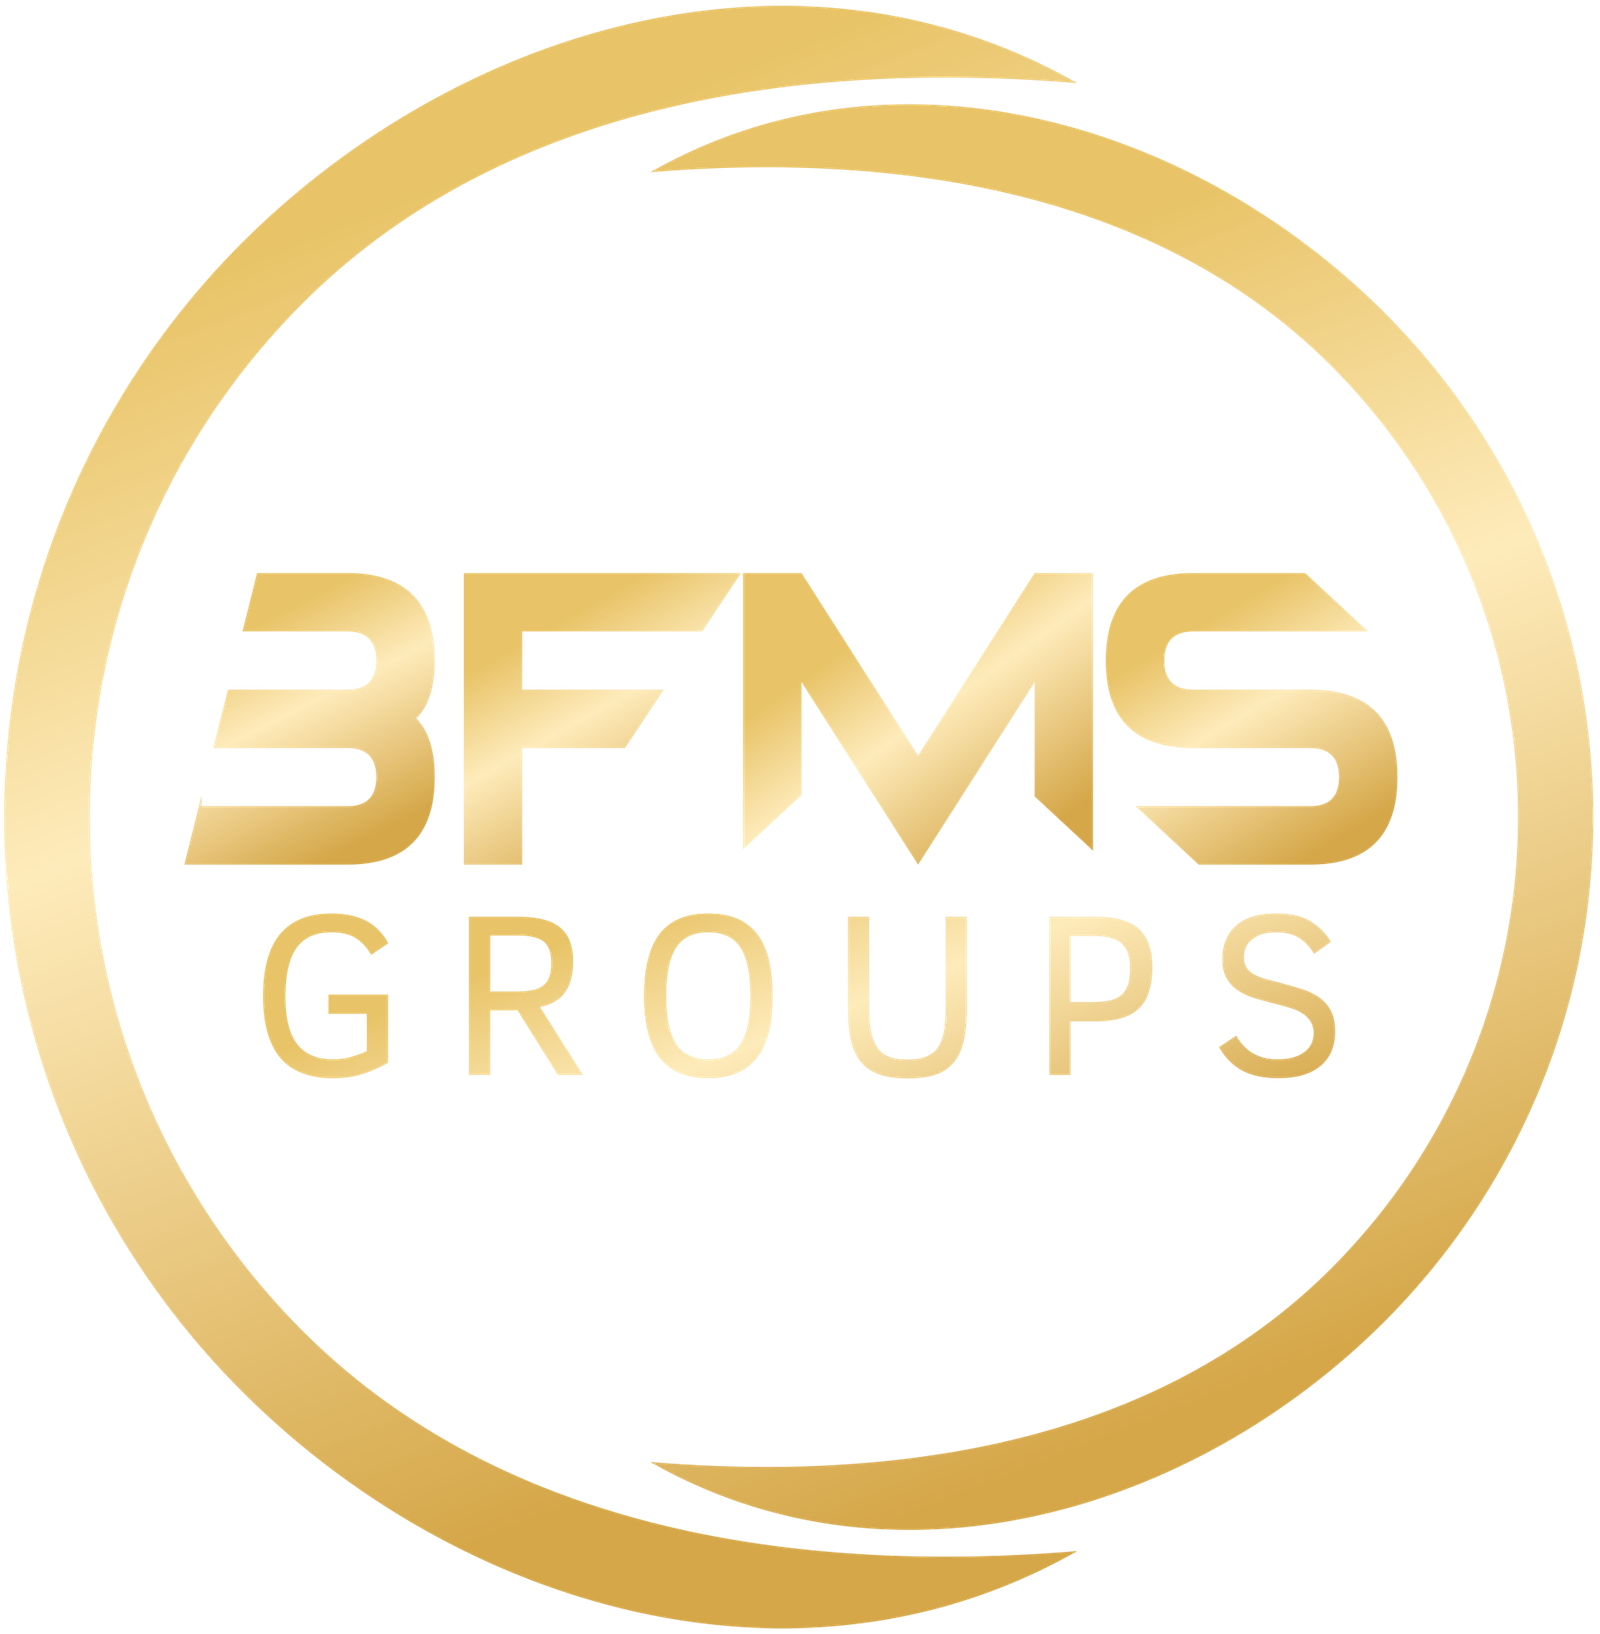 BFMS Groups